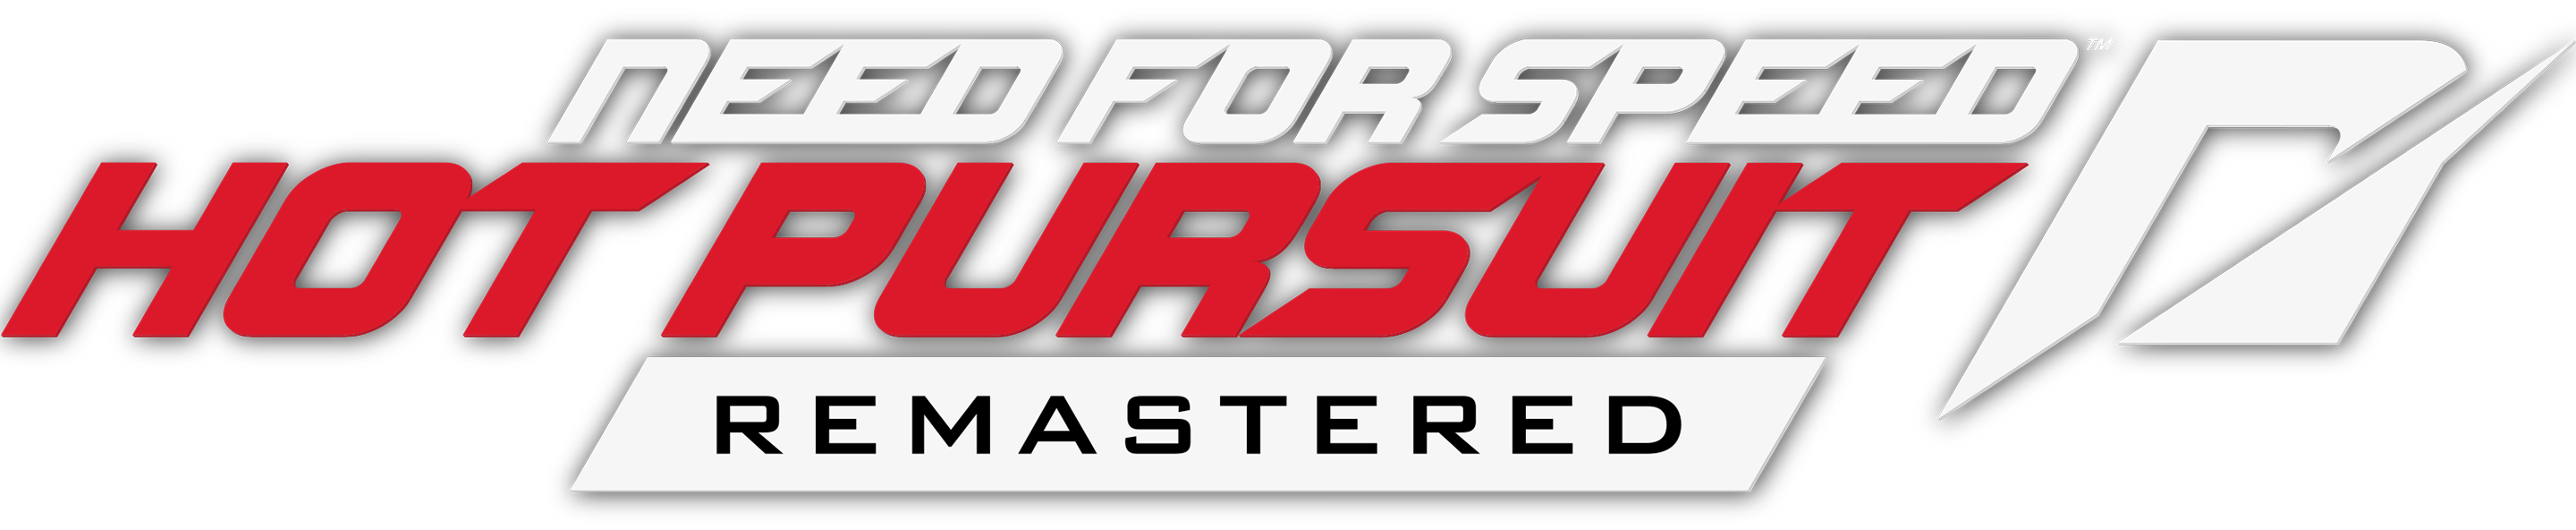 Горячая спид. NFS логотип. Need for Speed hot Pursuit ремастер. Логотип need for Speed hot Pursuit Remastered. Need for Speed hot Pursuit Remastered logo.